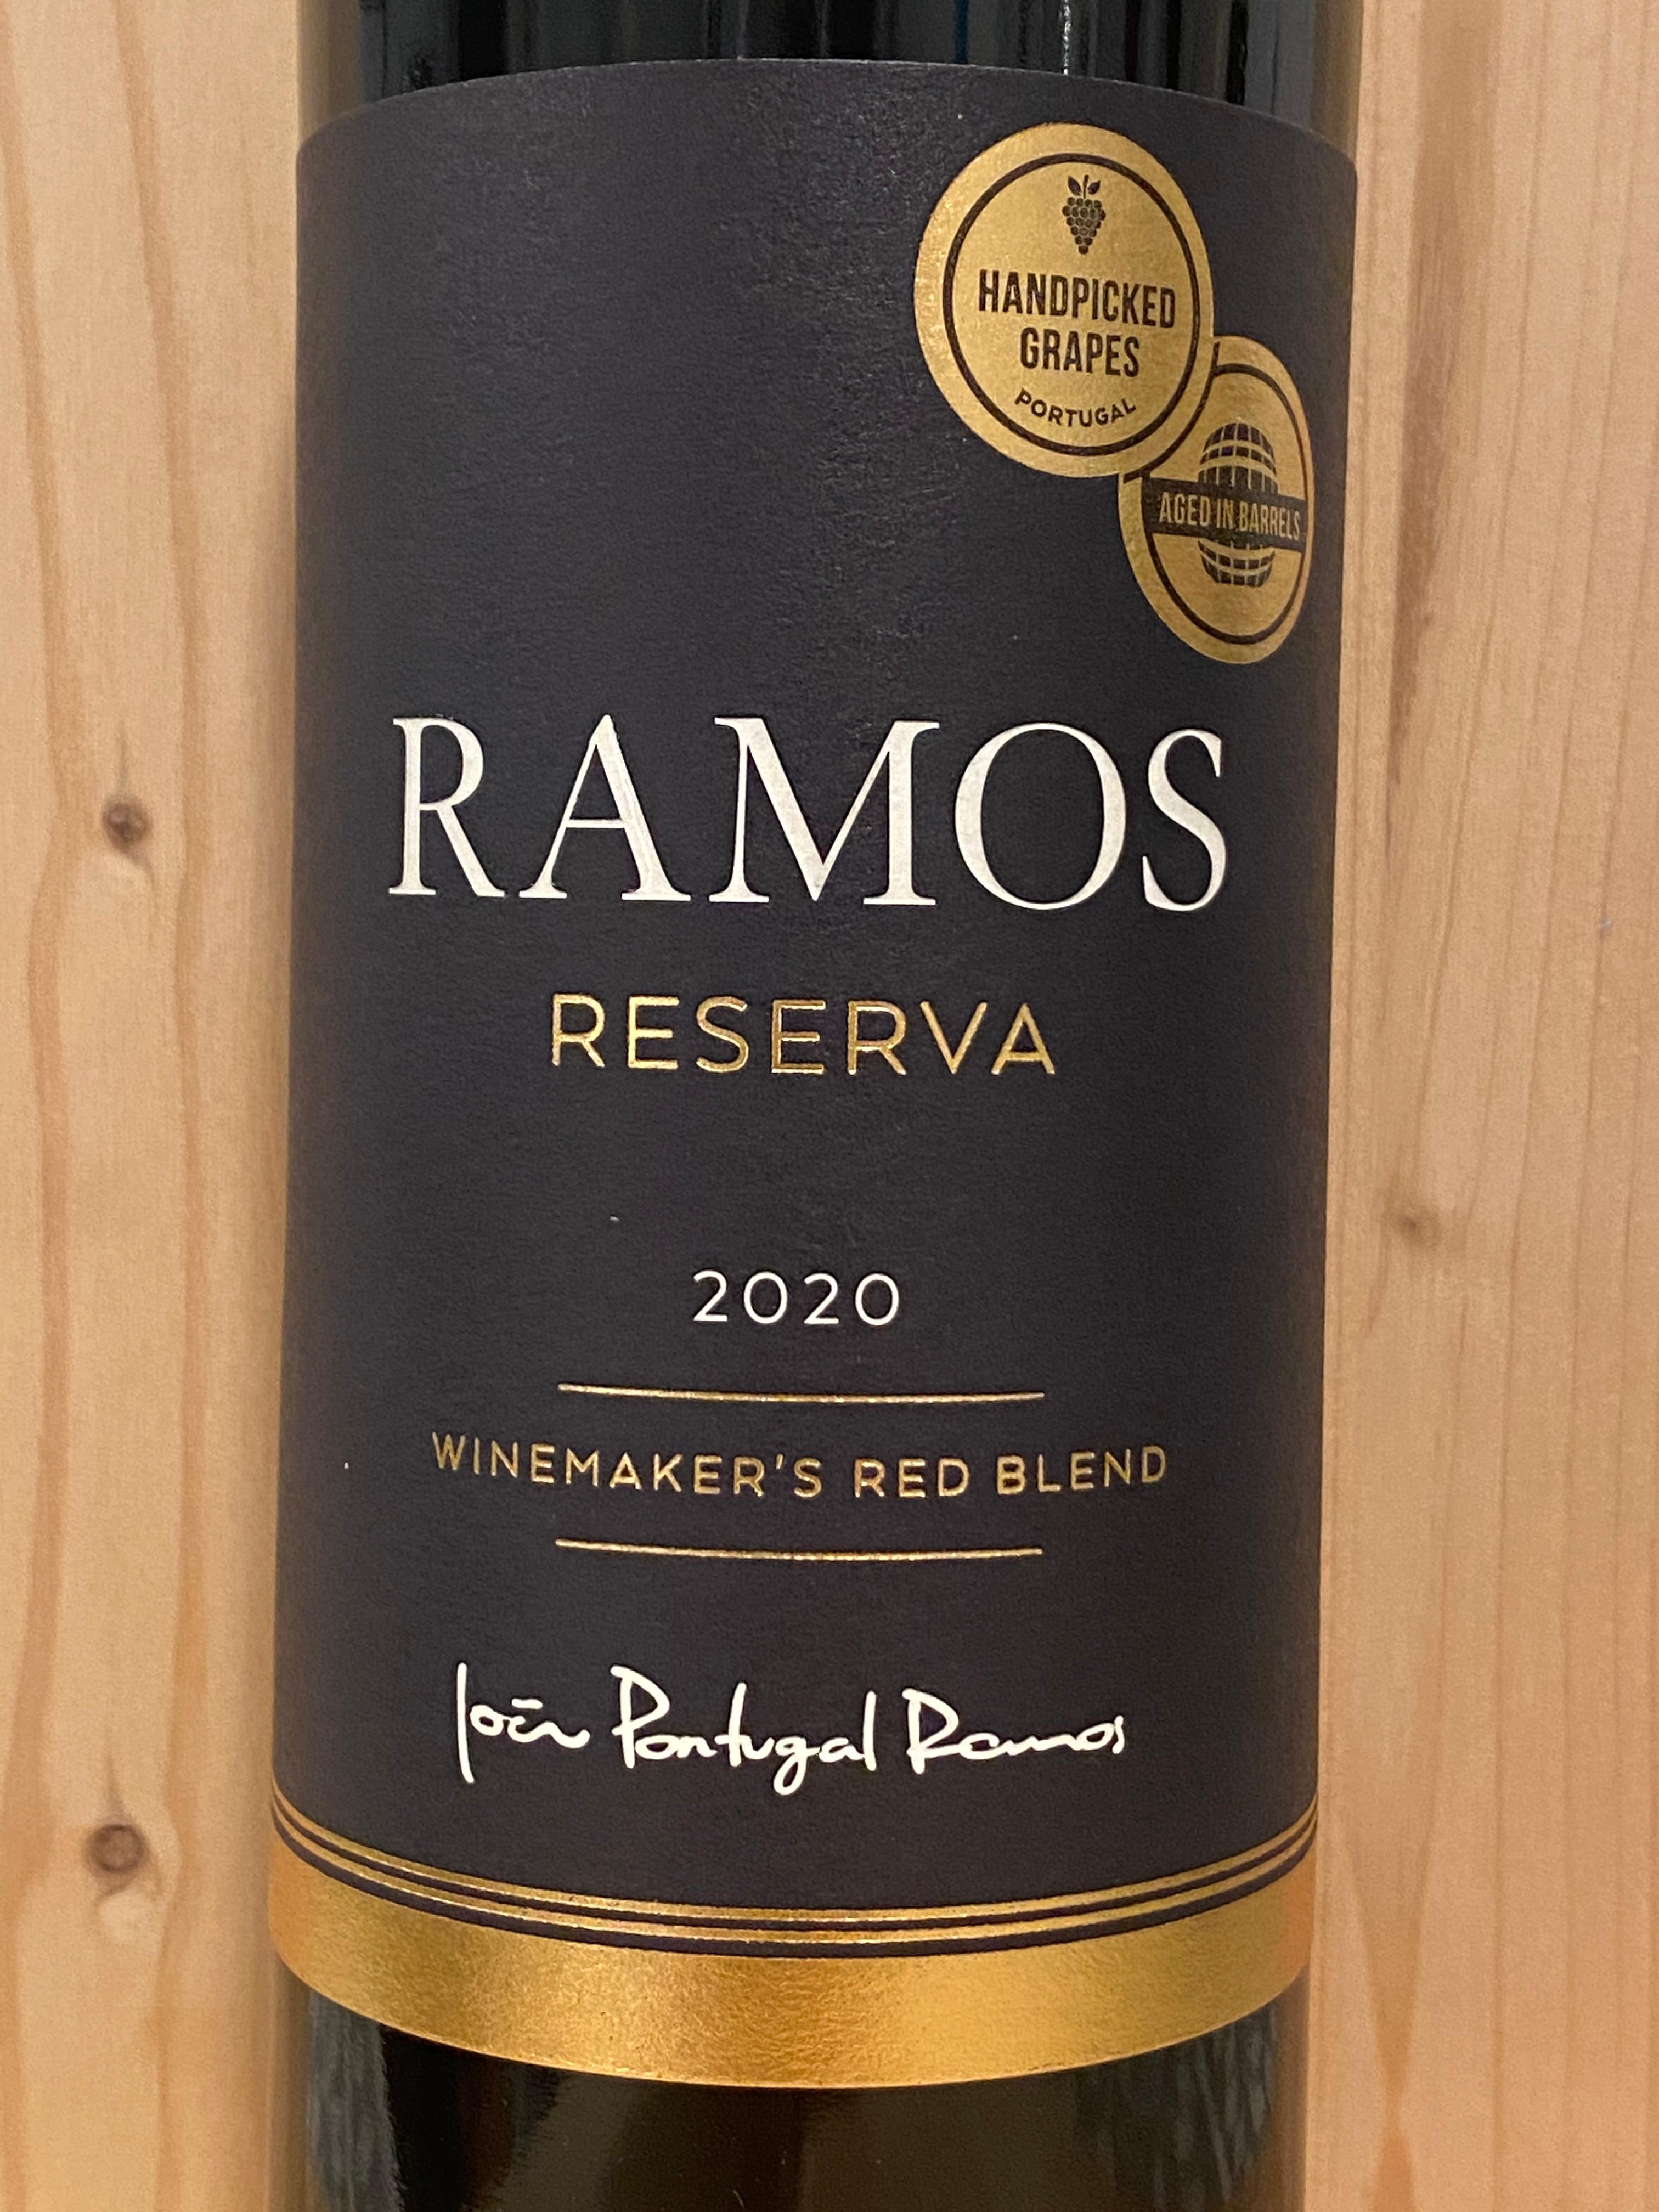 João Portugal Ramos "Winemaker's Blend" Reserva 2020: Alentejo, Portugal